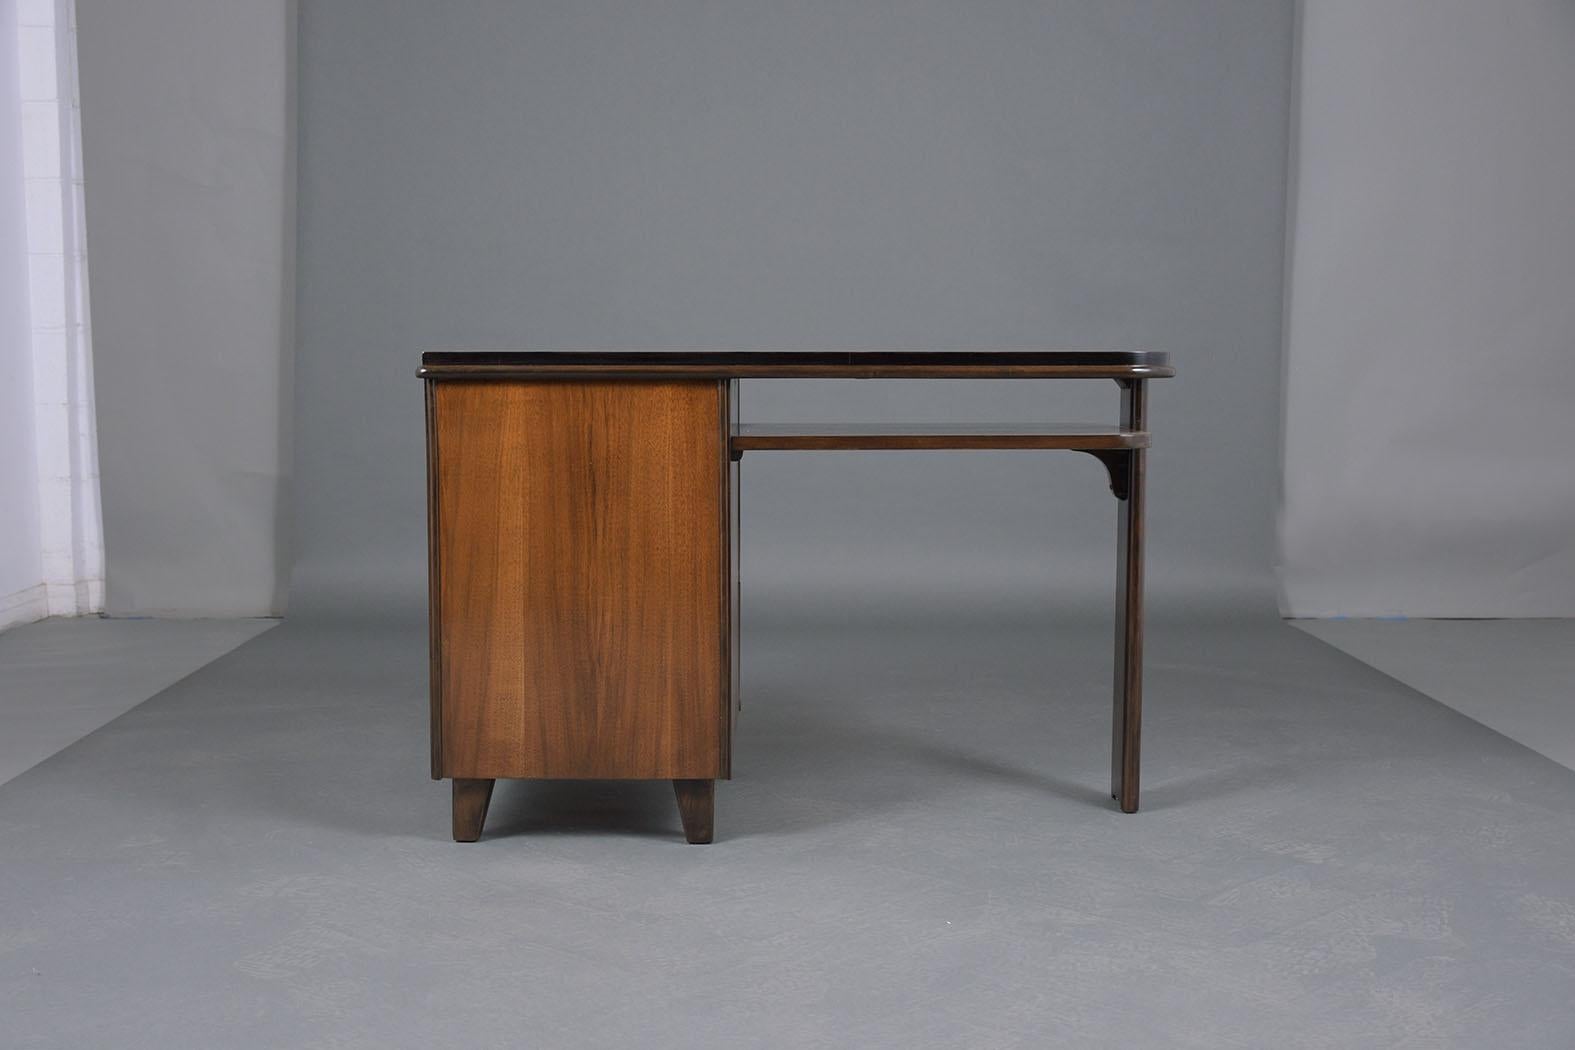 1950s Art Deco Pedestal Desk in Walnut & Ebonized Finish with Brass Accents For Sale 7